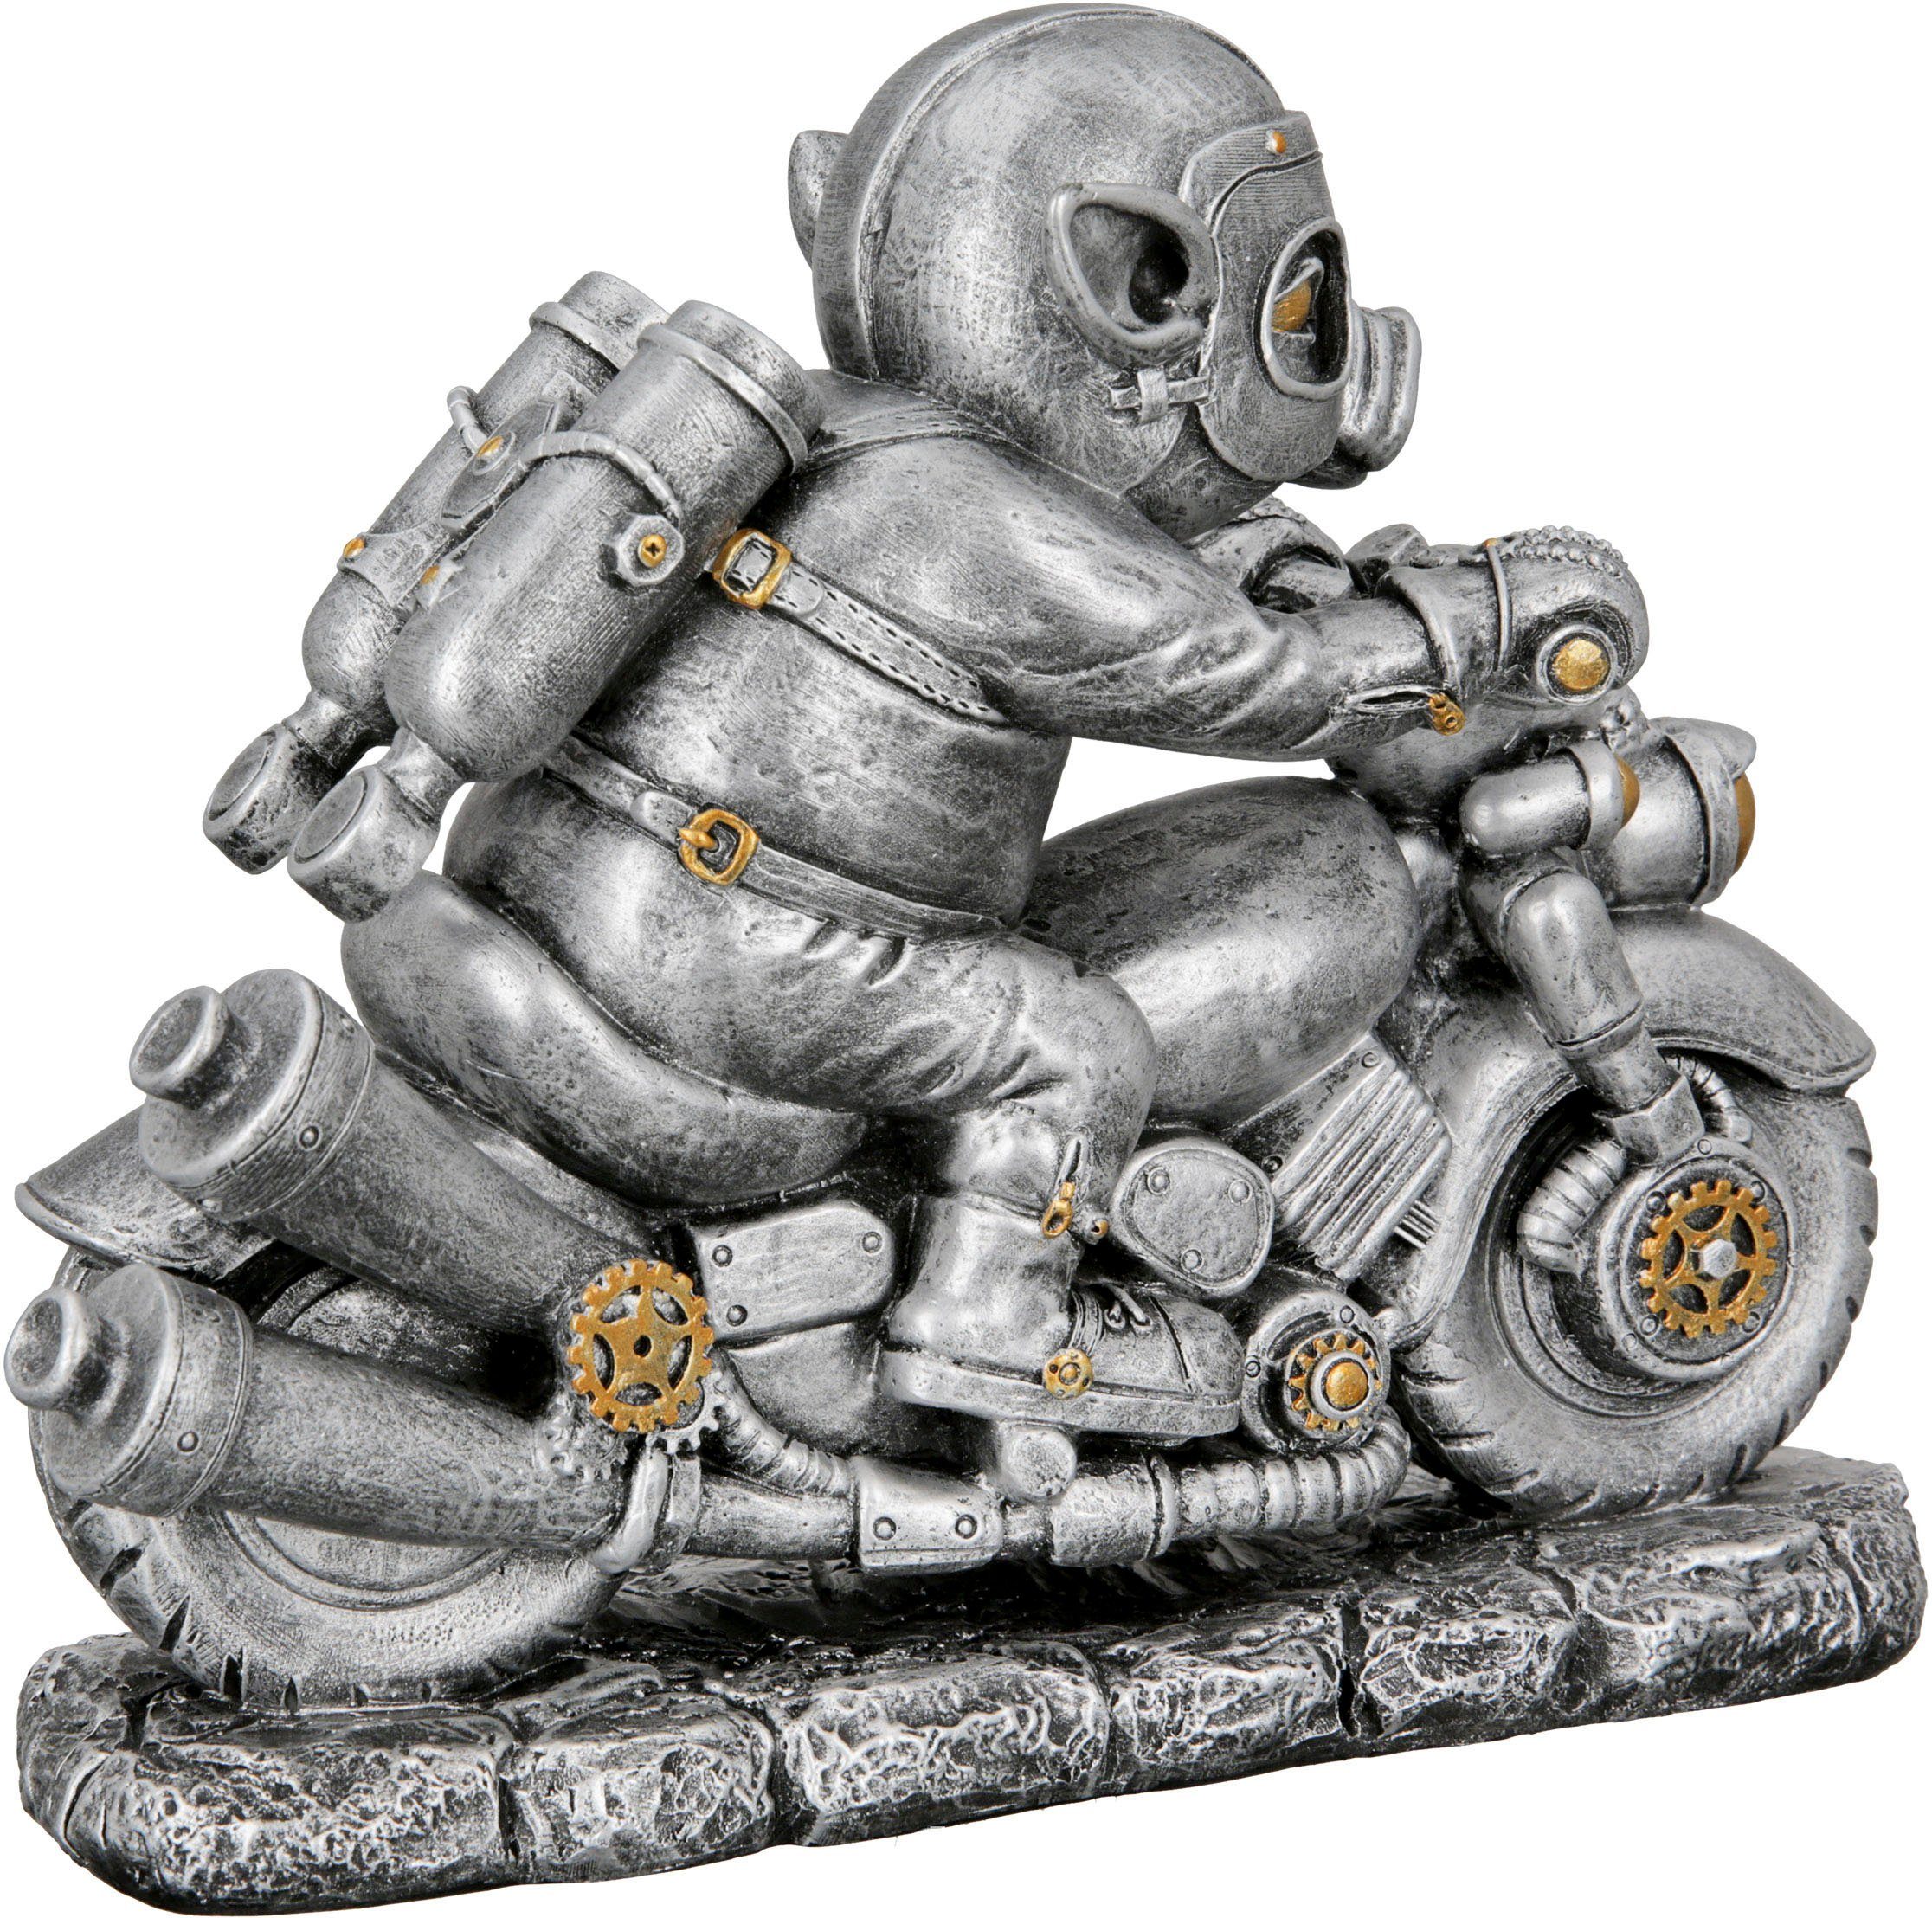 Motor-Pig (1 St) by Tierfigur Skulptur Gilde Casablanca Steampunk